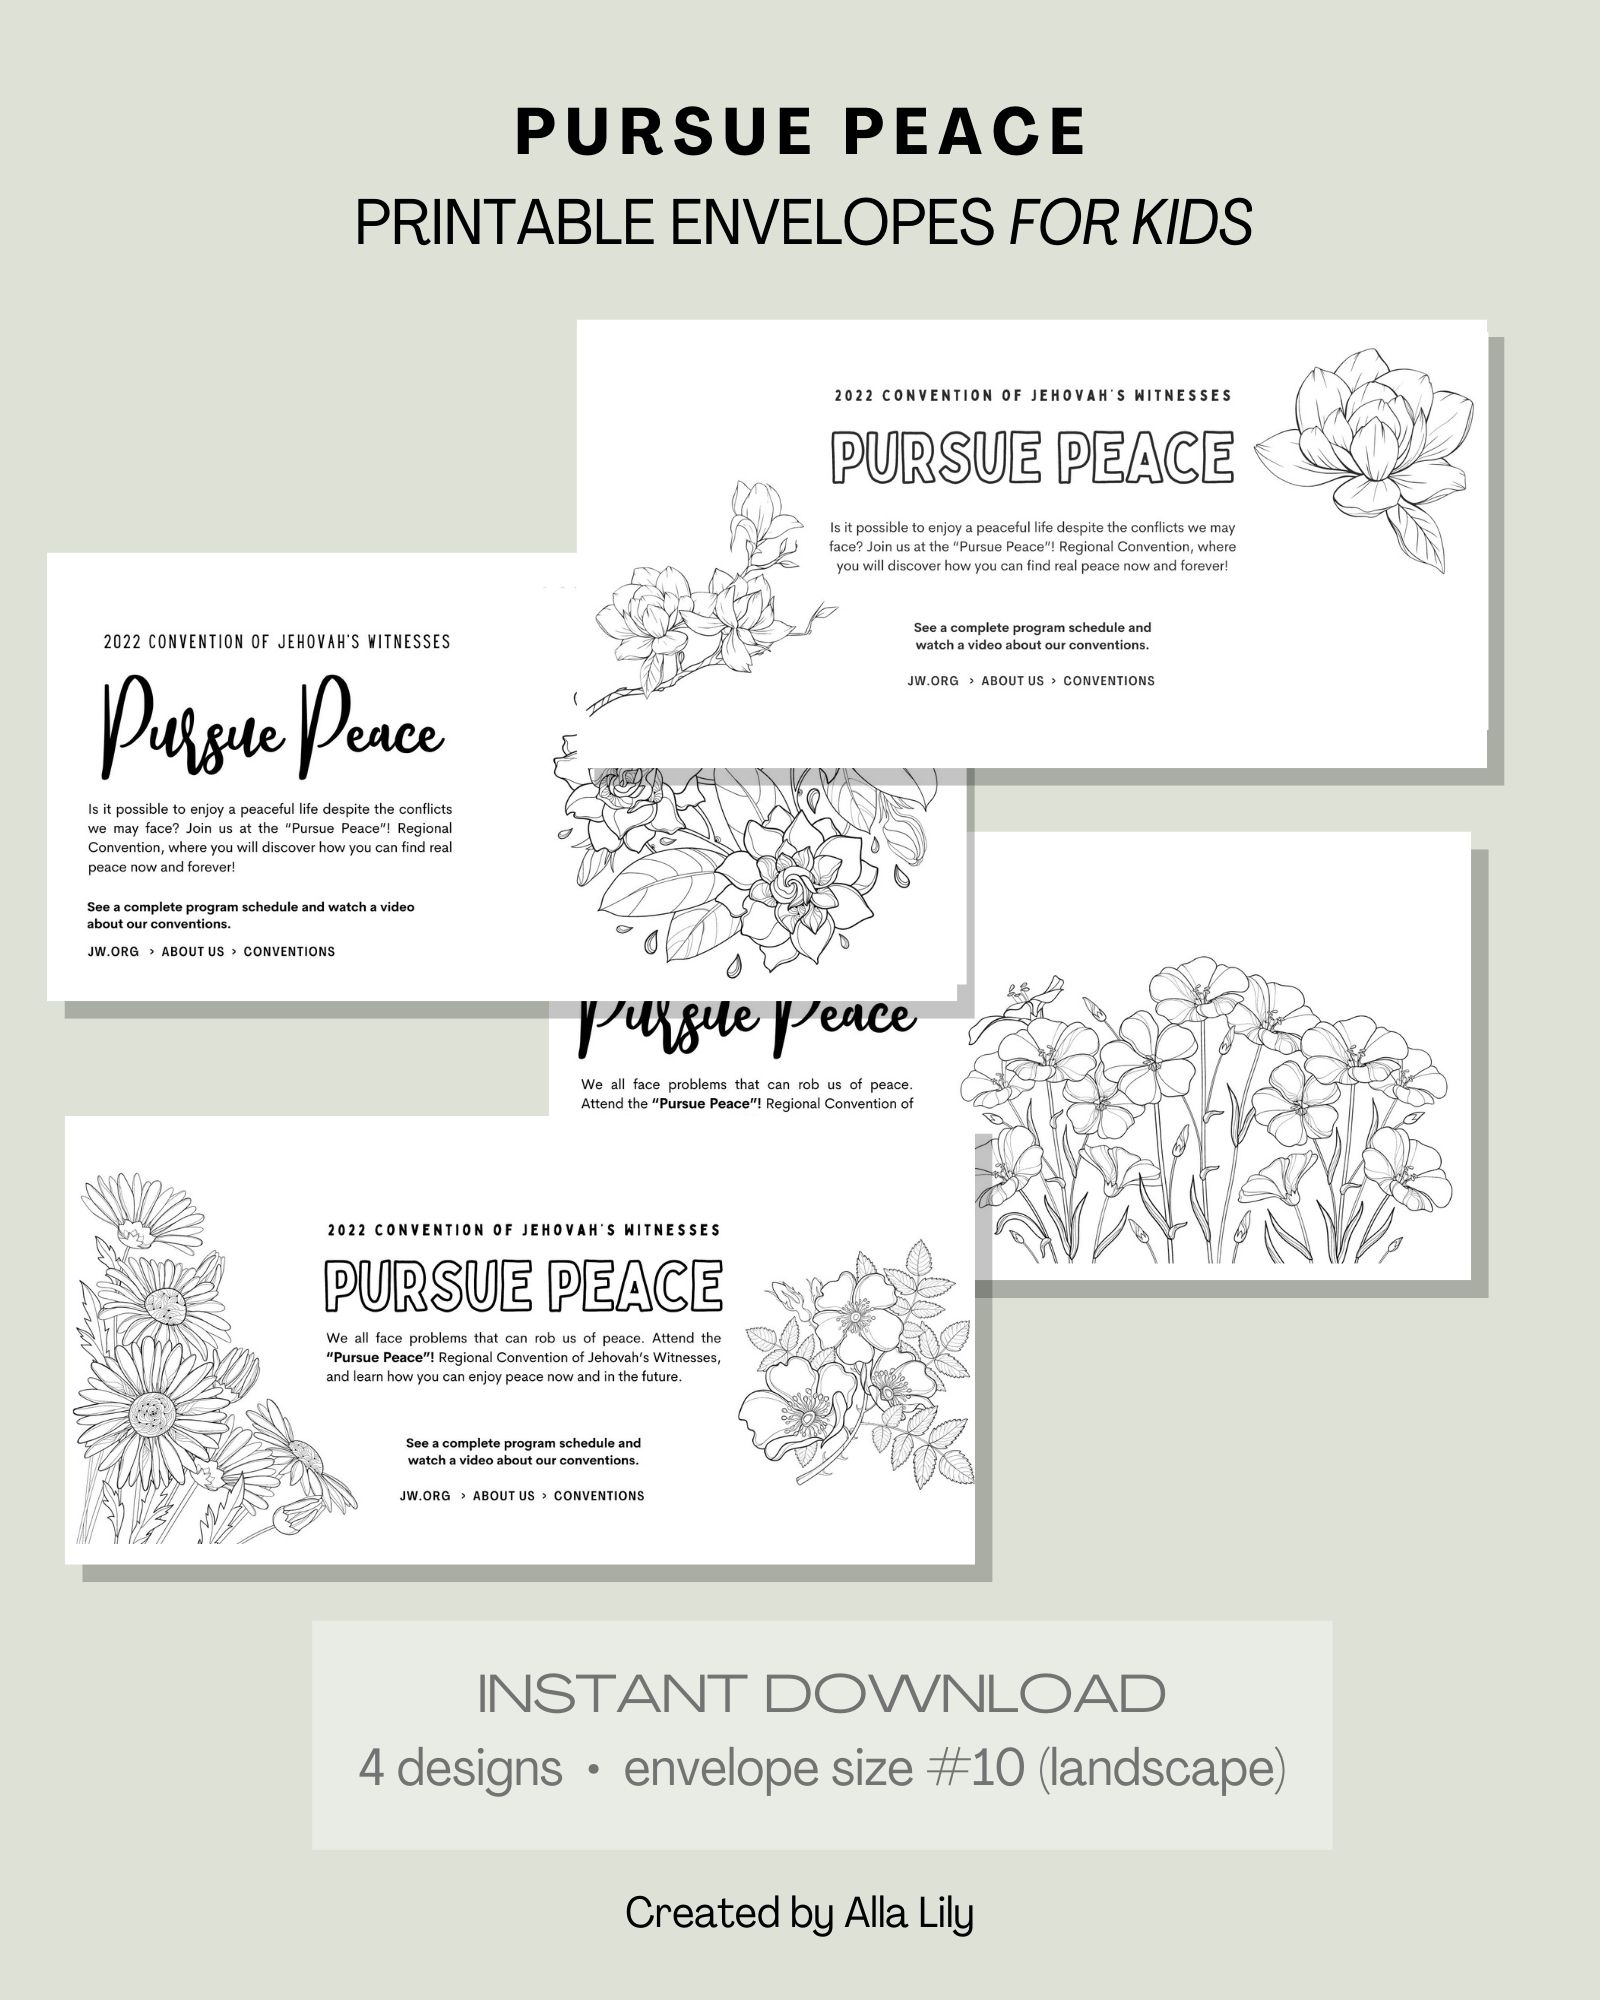 jw printable envelopes for kids pursue peace